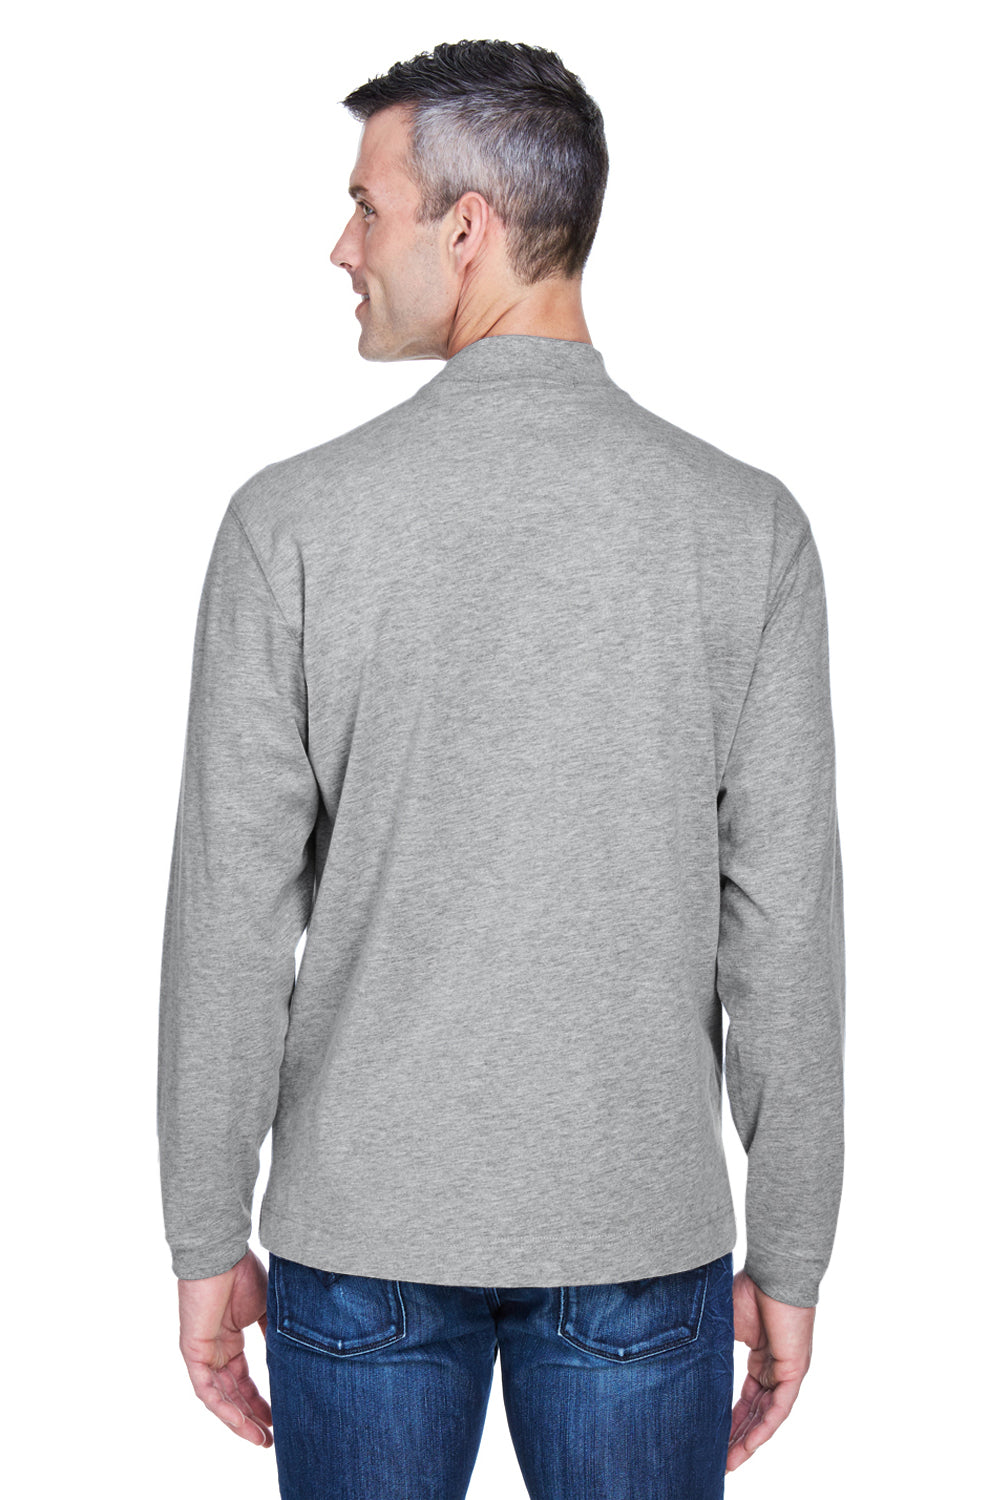 Devon & Jones D420 Mens Sueded Jersey Long Sleeve Mock Neck T-Shirt Heather Grey Back